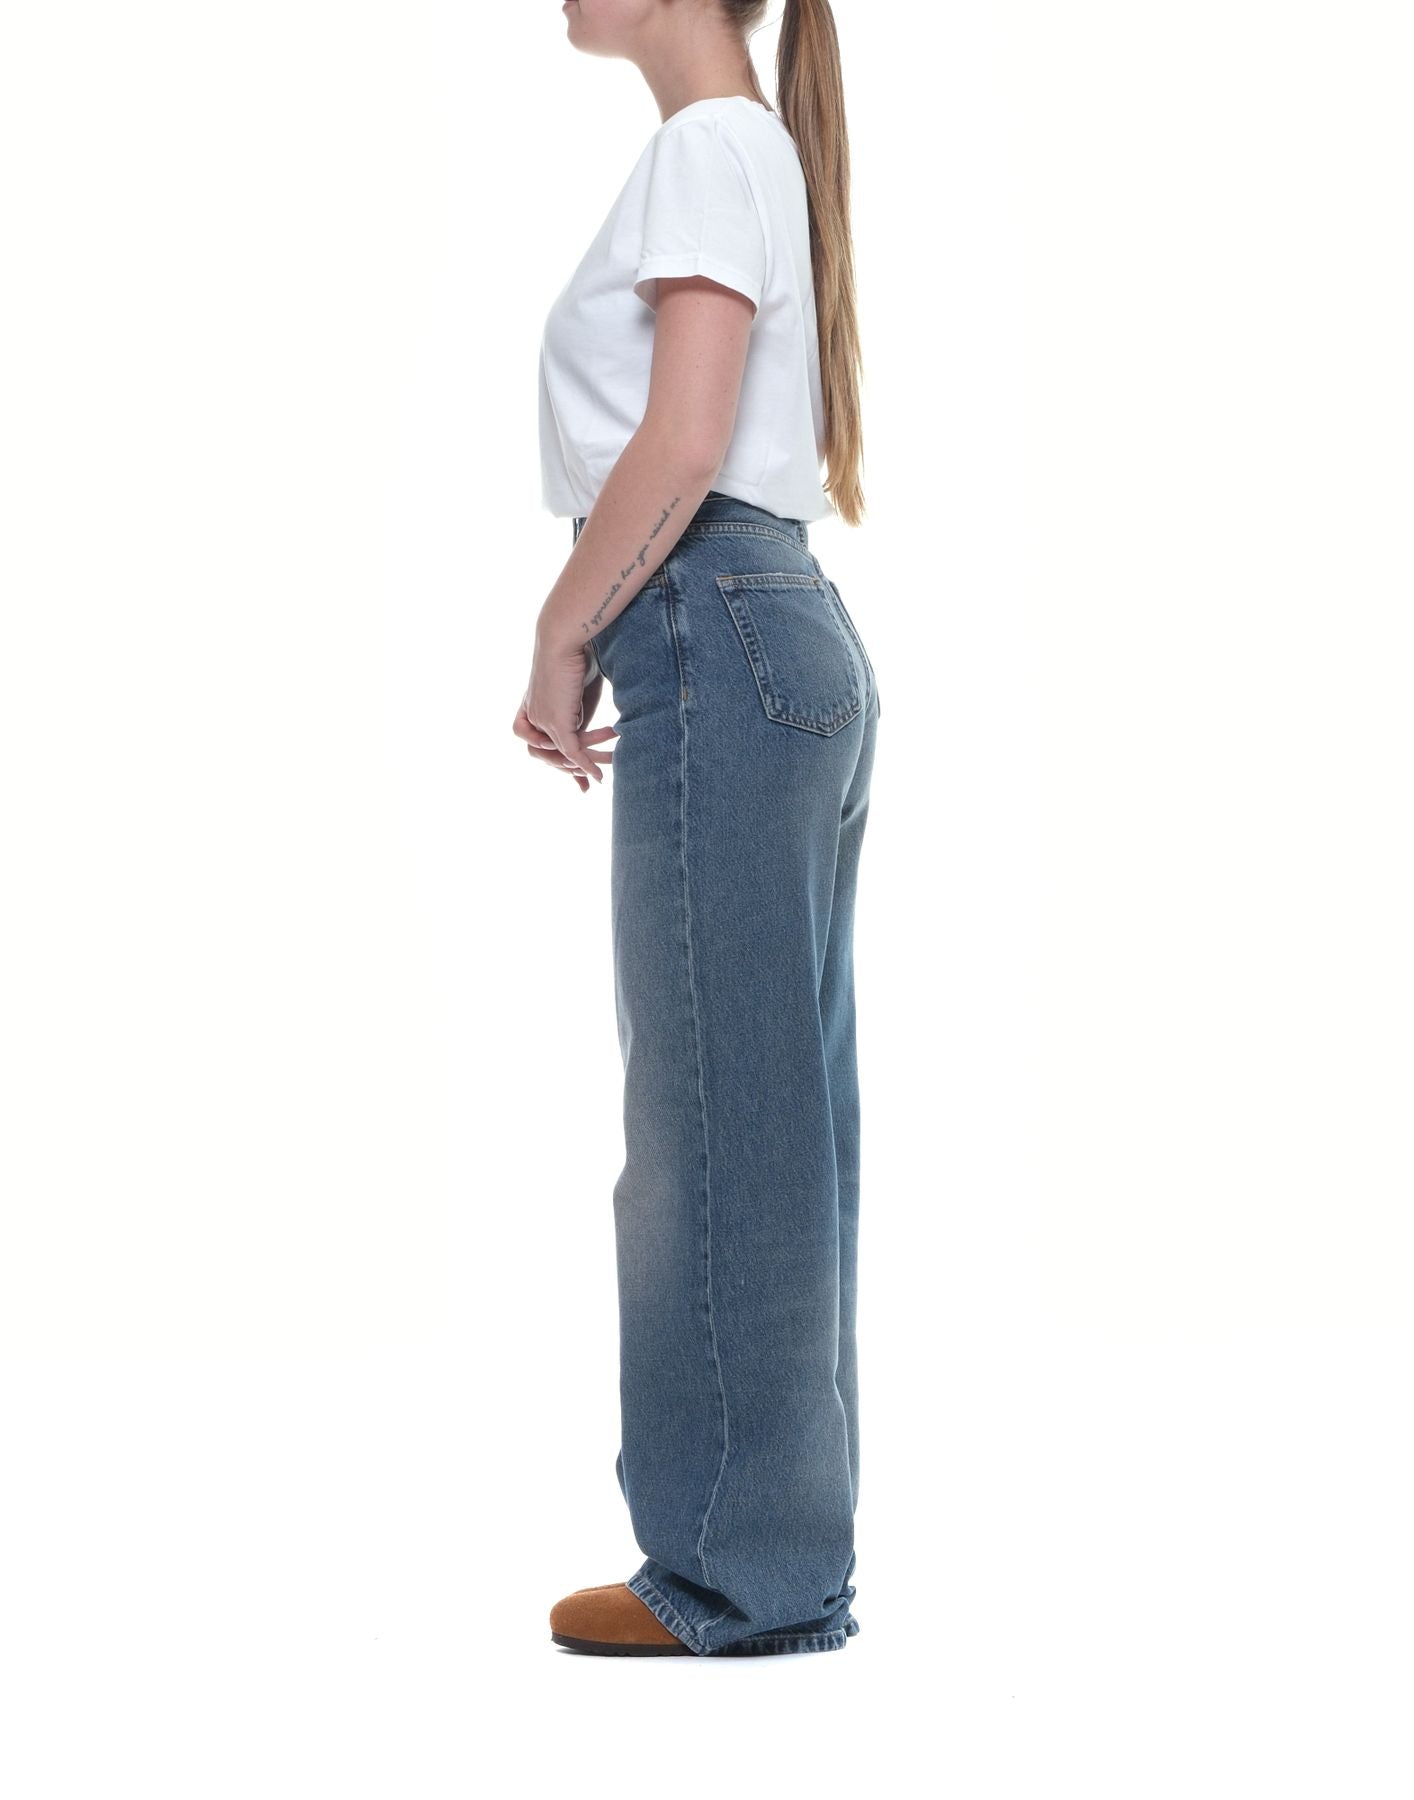 Jeans woman i030497 blu scuro carhartt wip